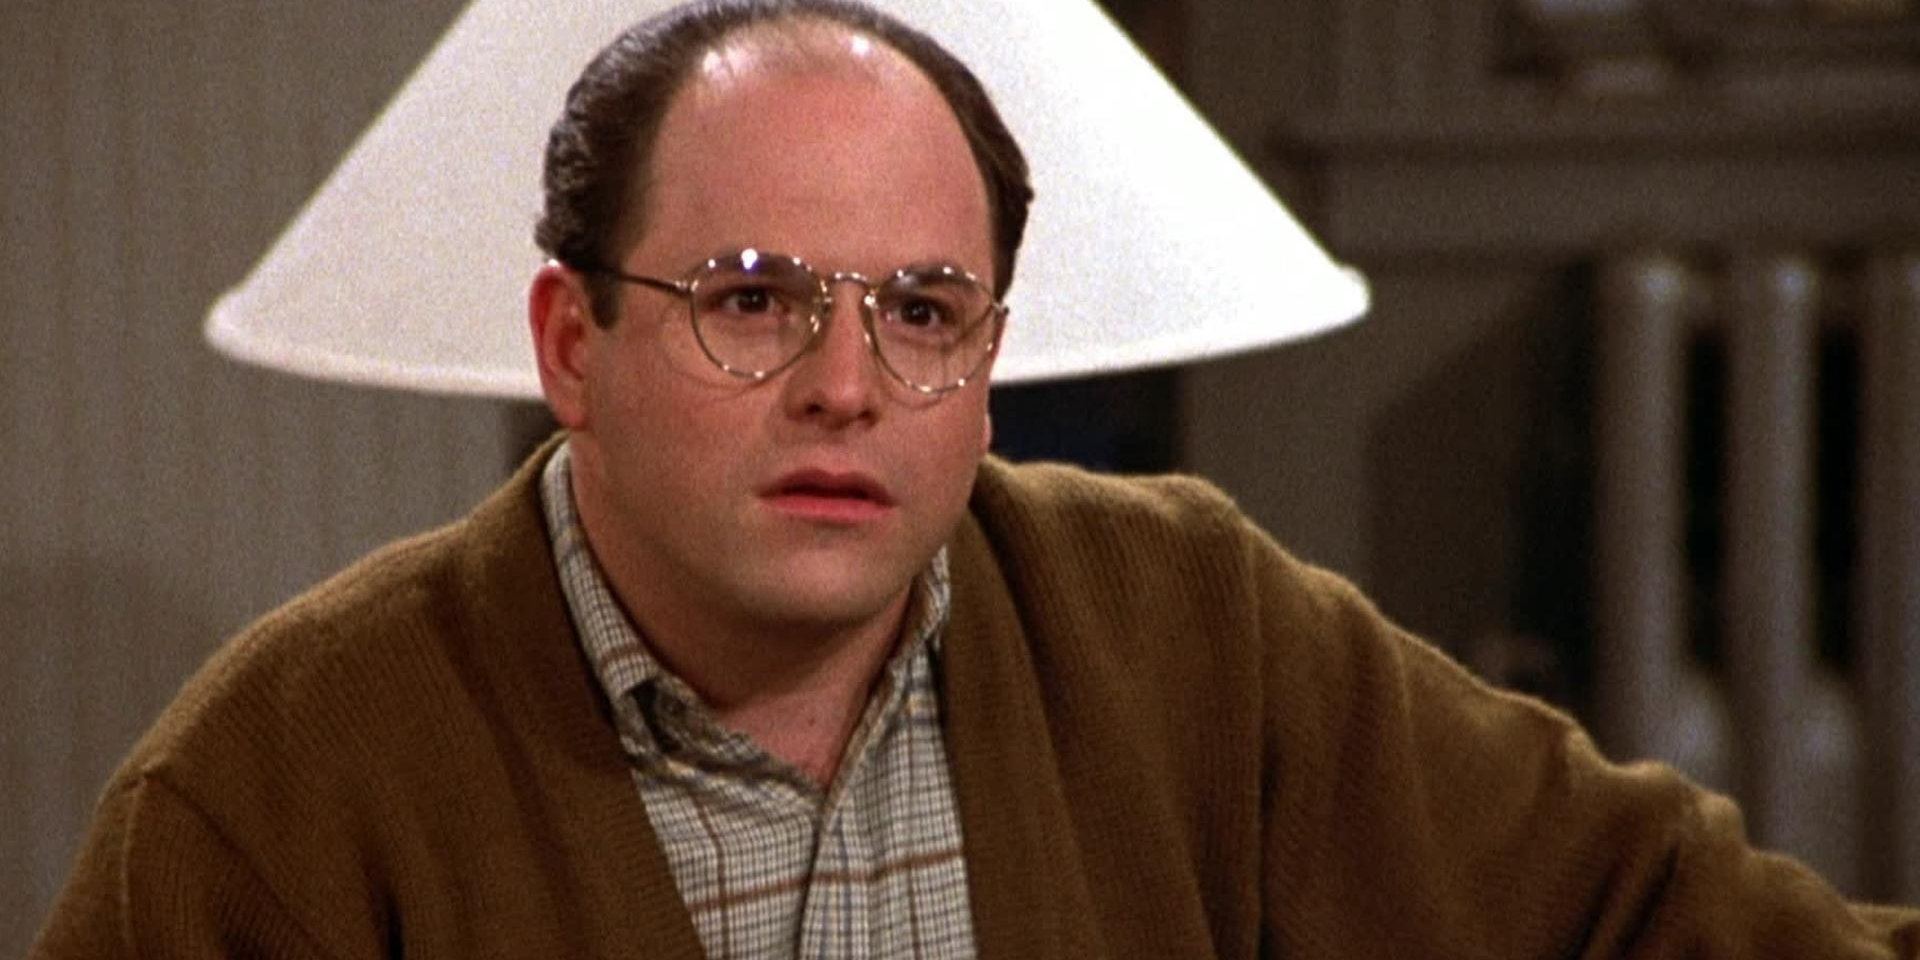 George parecendo bravo em Seinfeld 